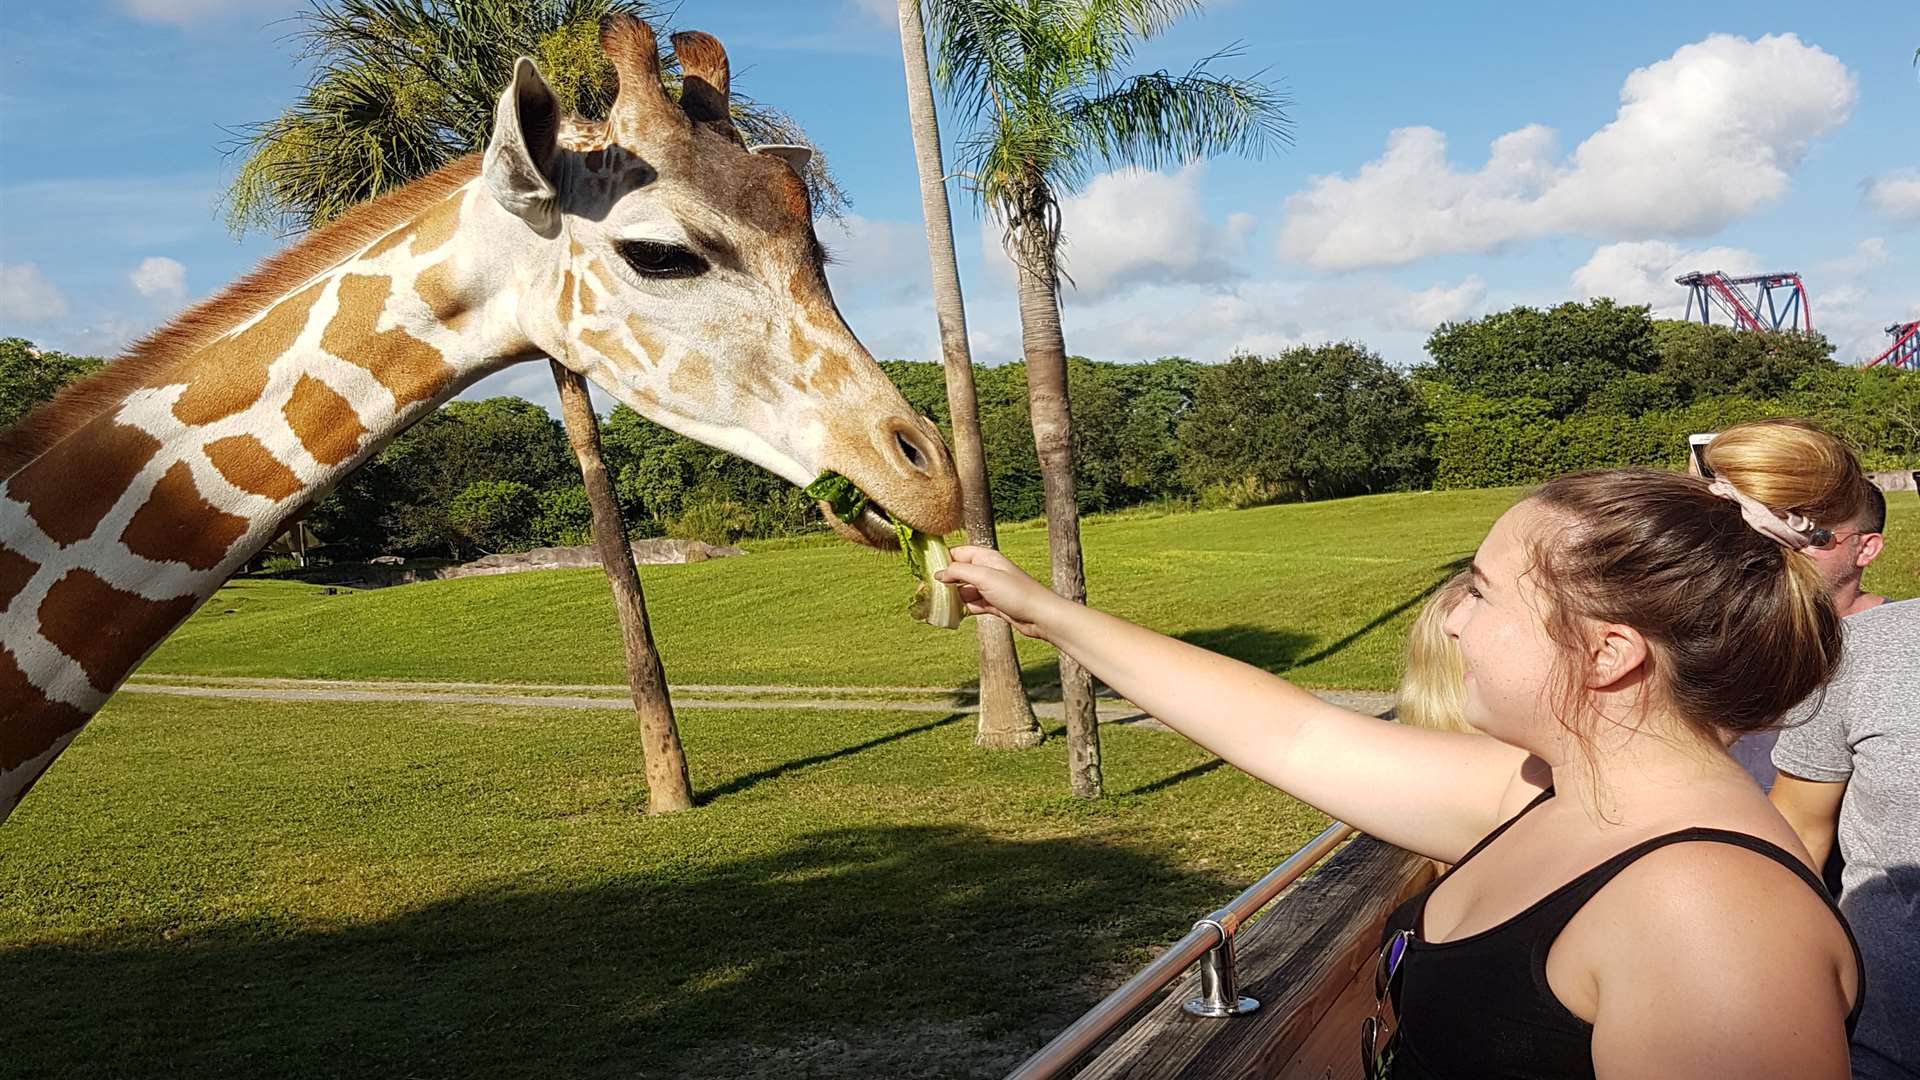 We got to feed the giraffes at Busch Gardens